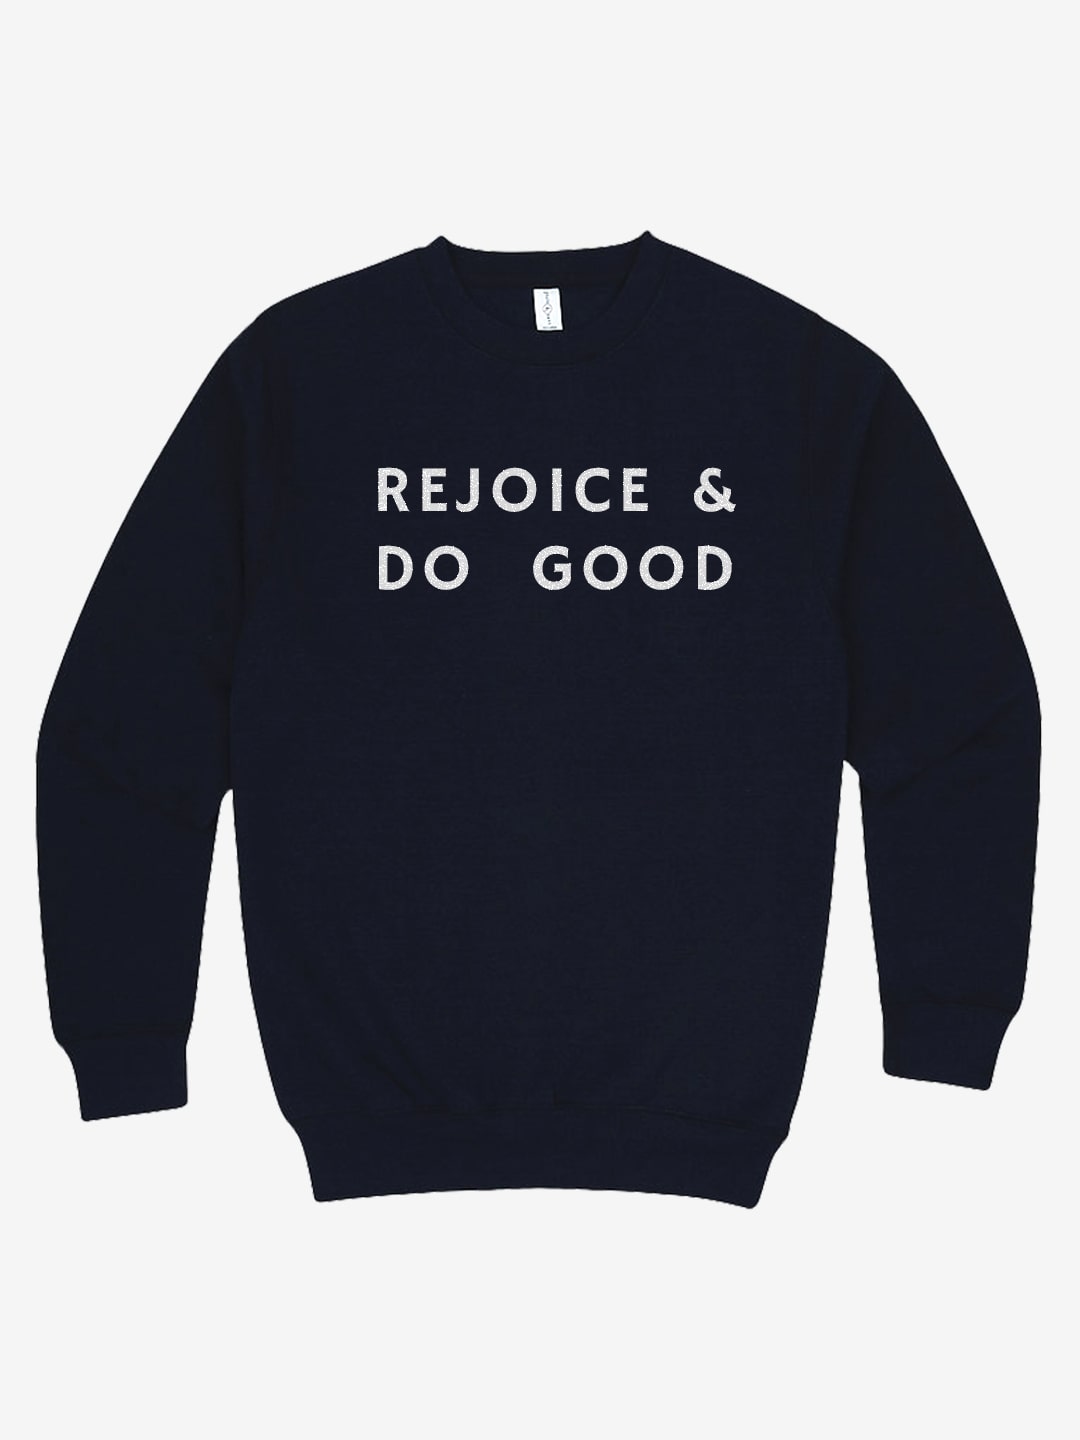 Rejoice and Do Good Christian Apparel - Navy Blue Crew Sweatshirt with Rejoice & Do Good Words on It